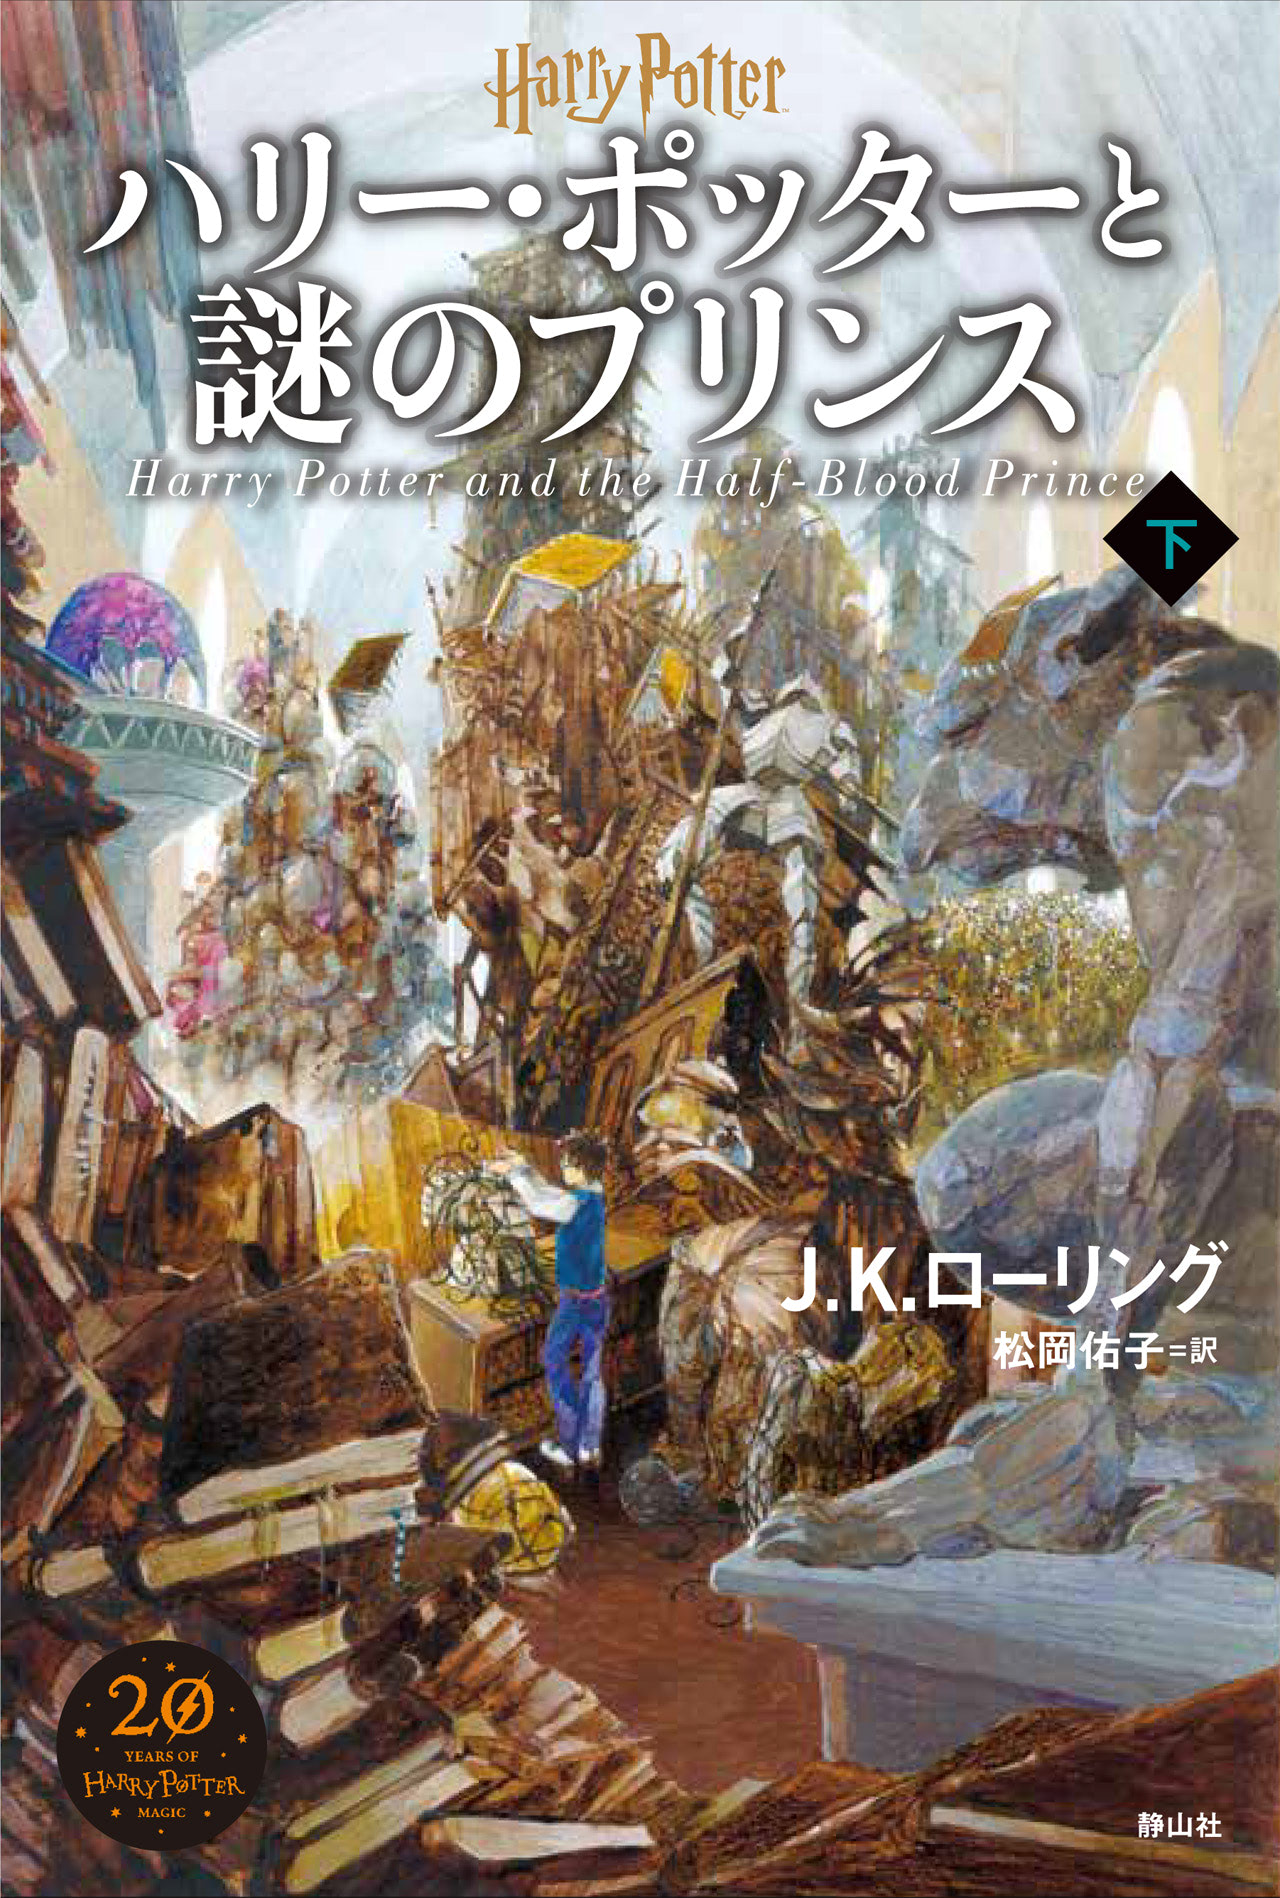 ‘Half-Blood Prince’ Japanese 20th anniversary edition (volume 2)